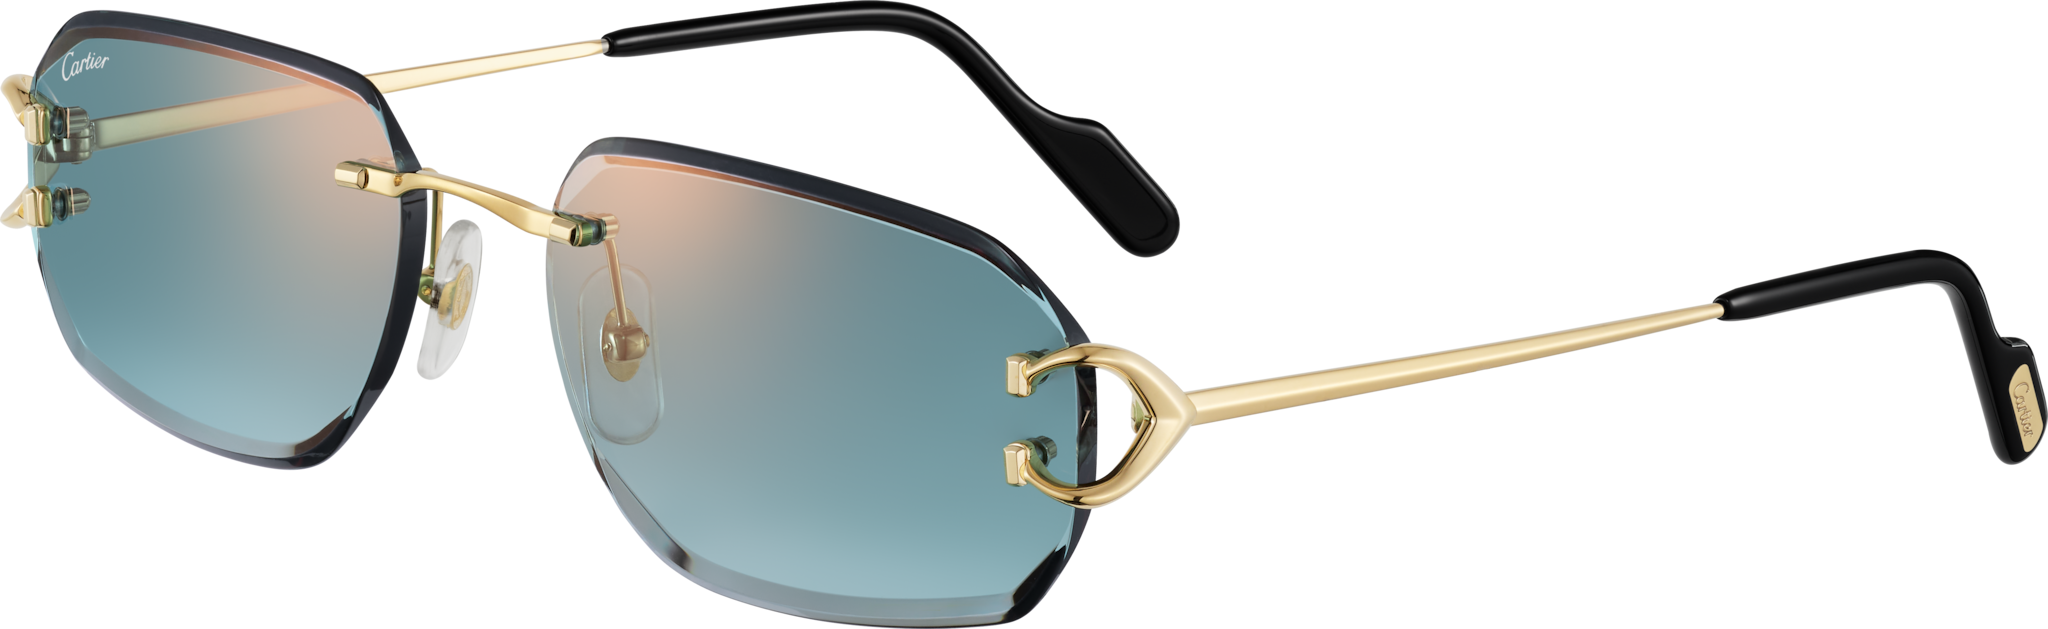 Signature C de Cartier SunglassesSmooth golden-finish metal, green lenses